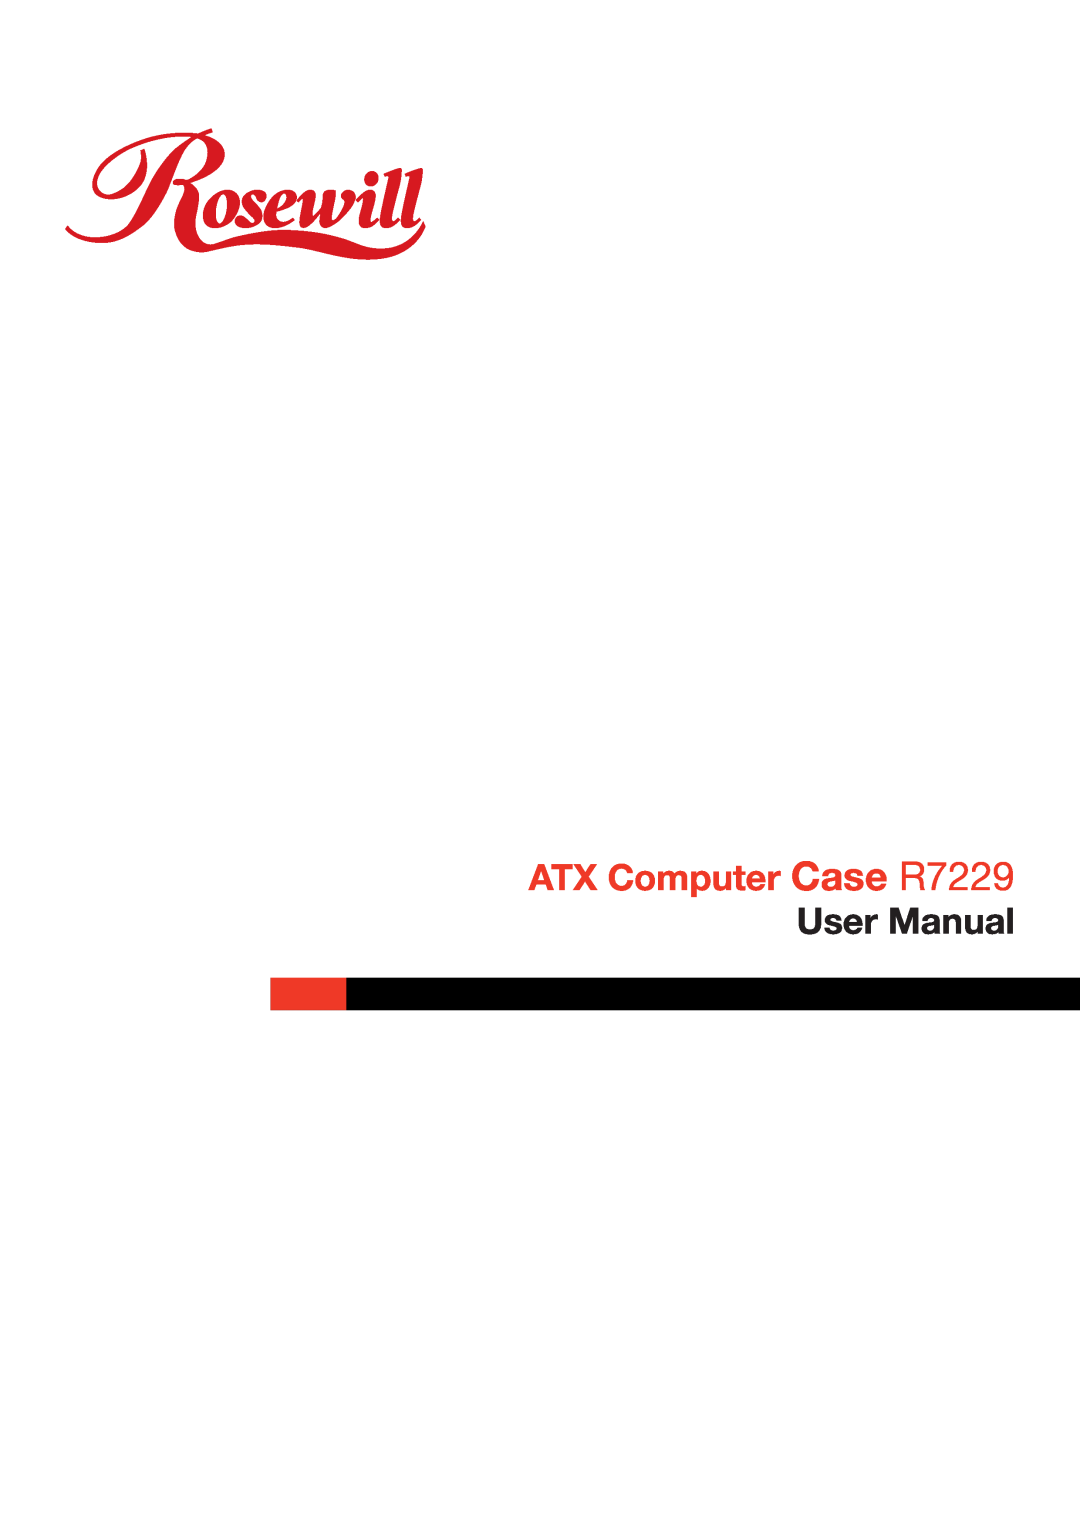 Rosewill manual ATX Computer Case R7229, User Manual 